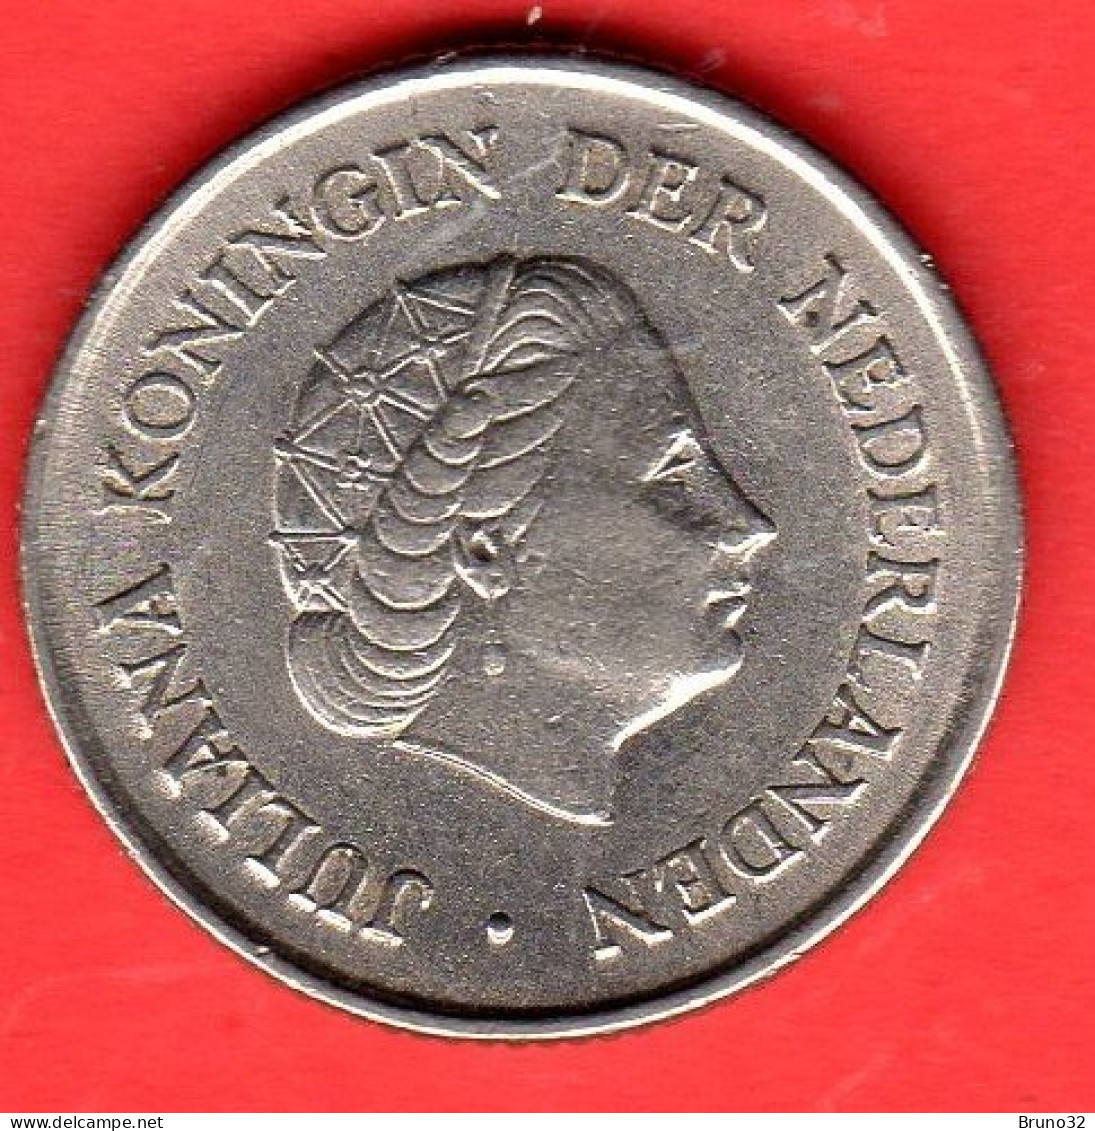 Paesi Bassi - Nederland - Pays Bas - 1960 - 25 Cents - SPL/XF - Come Da Foto - 1948-1980 : Juliana